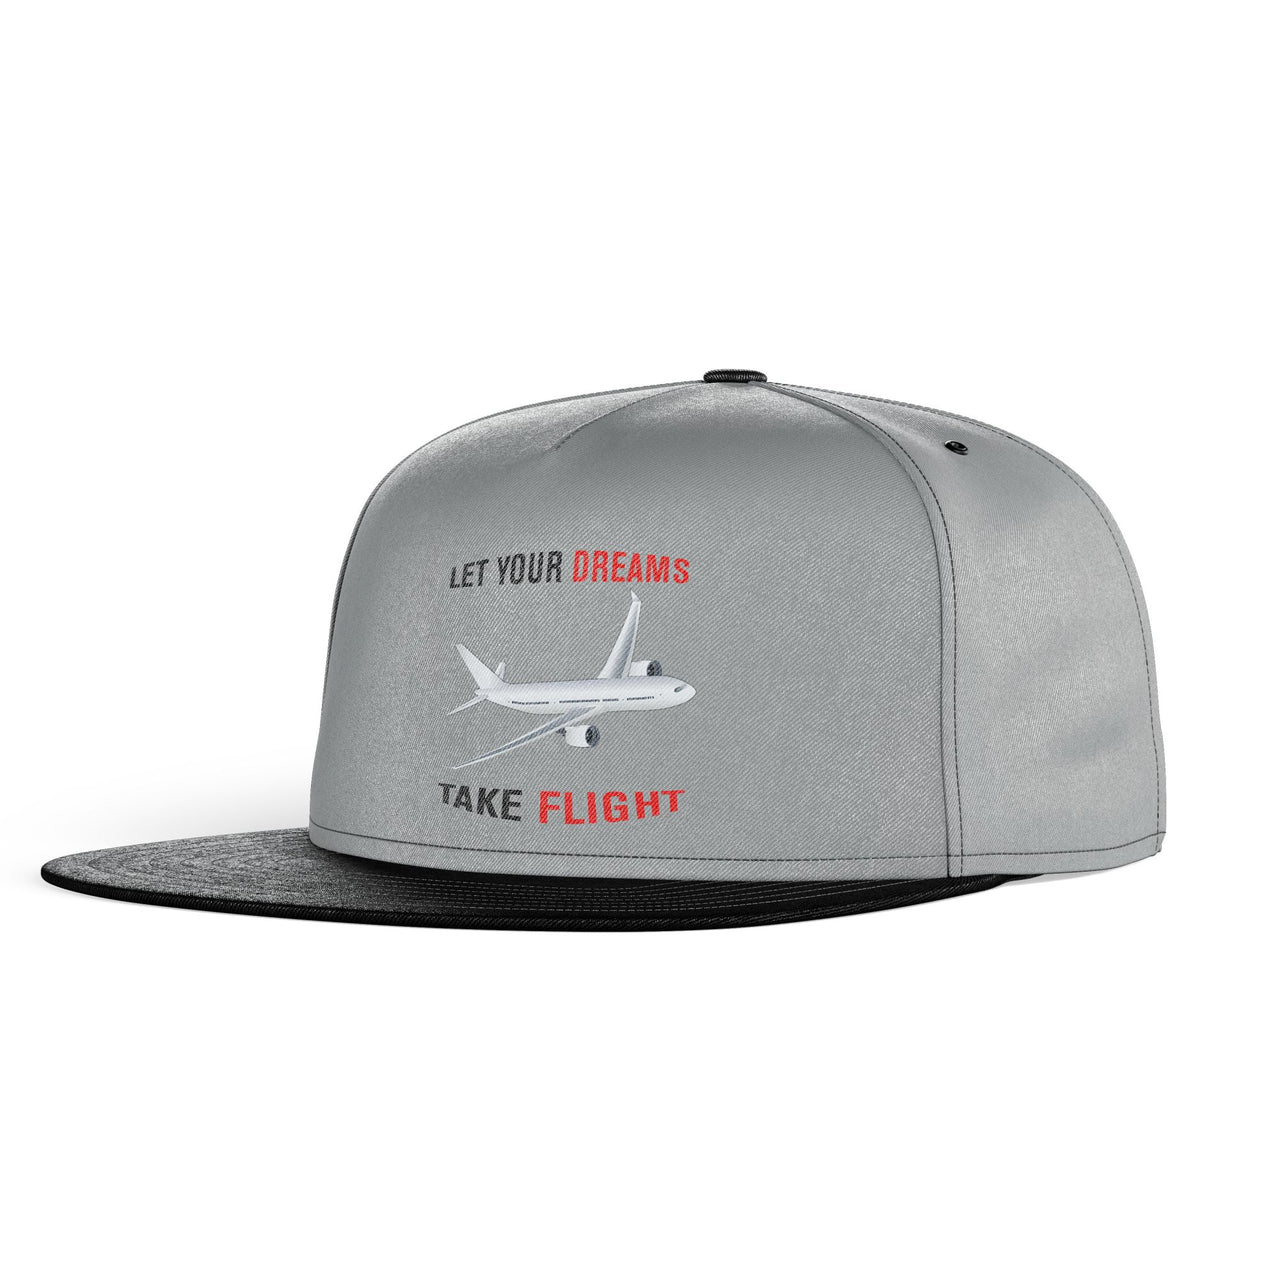 Let Your Dreams Take Flight Designed Snapback Caps & Hats